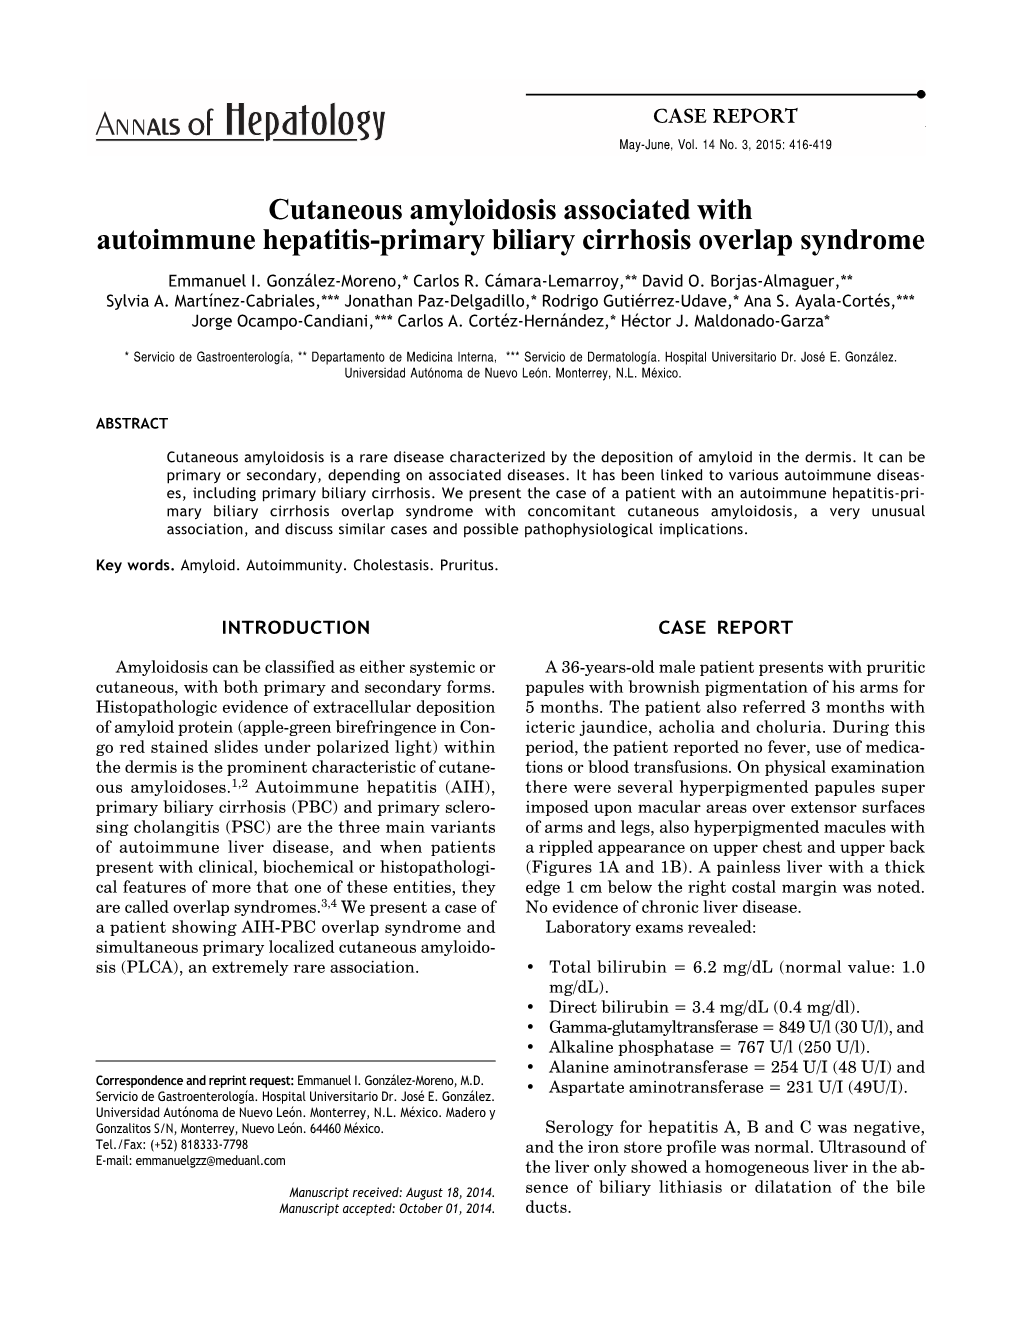 Cutaneous Amyloidosis Associated with Autoimmune Hepatitis-Primary Biliary Cirrhosis Overlap Syndrome